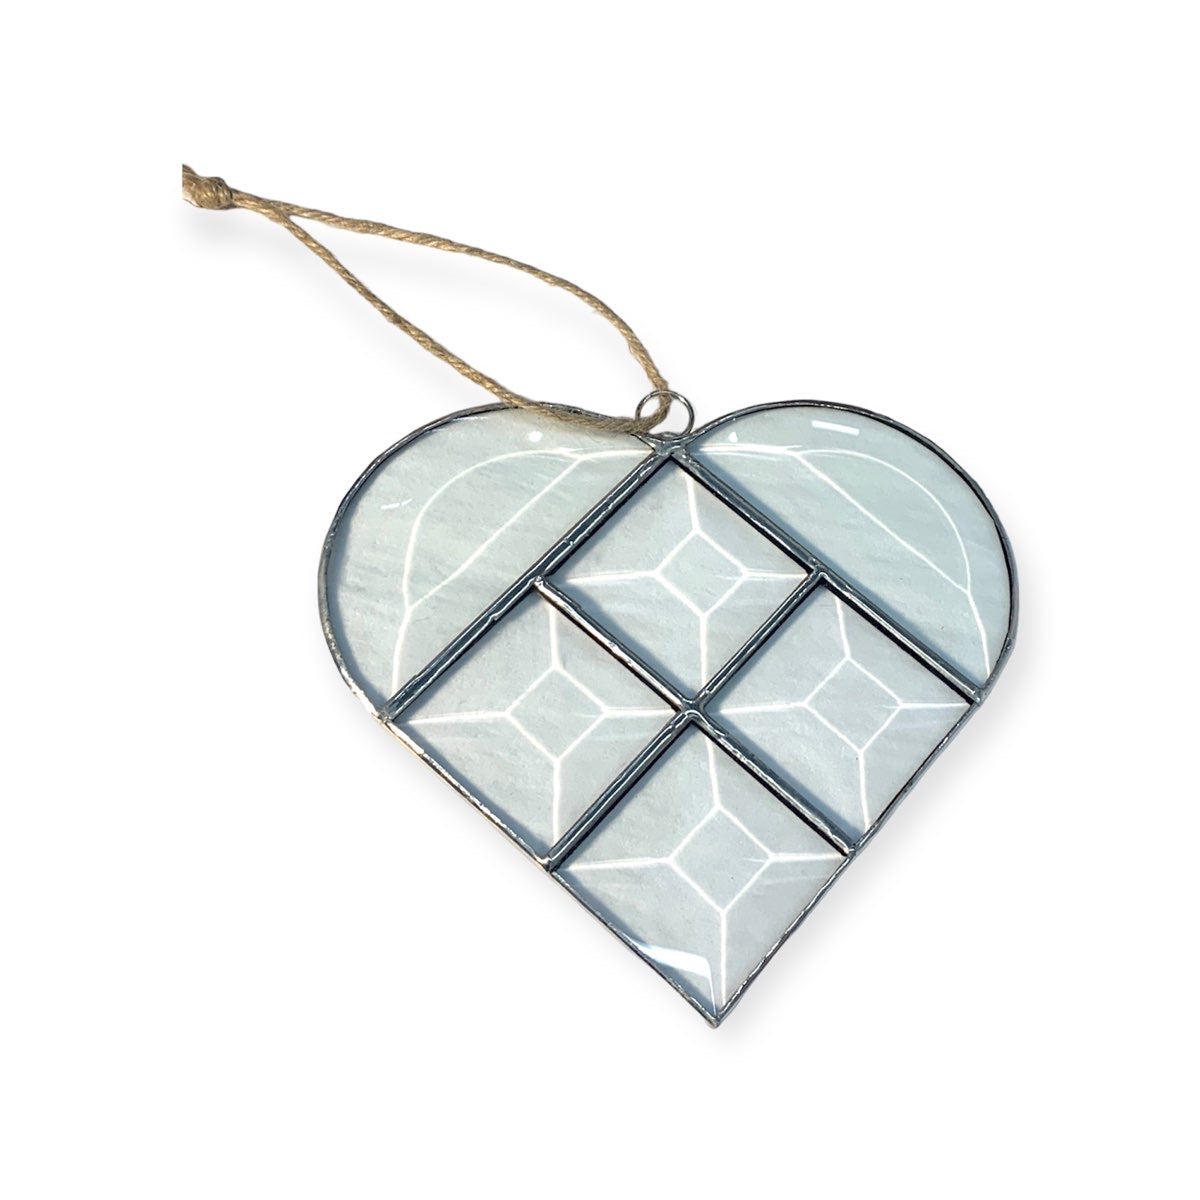 Stained Glass Heart Suncatcher- 5” x 5”